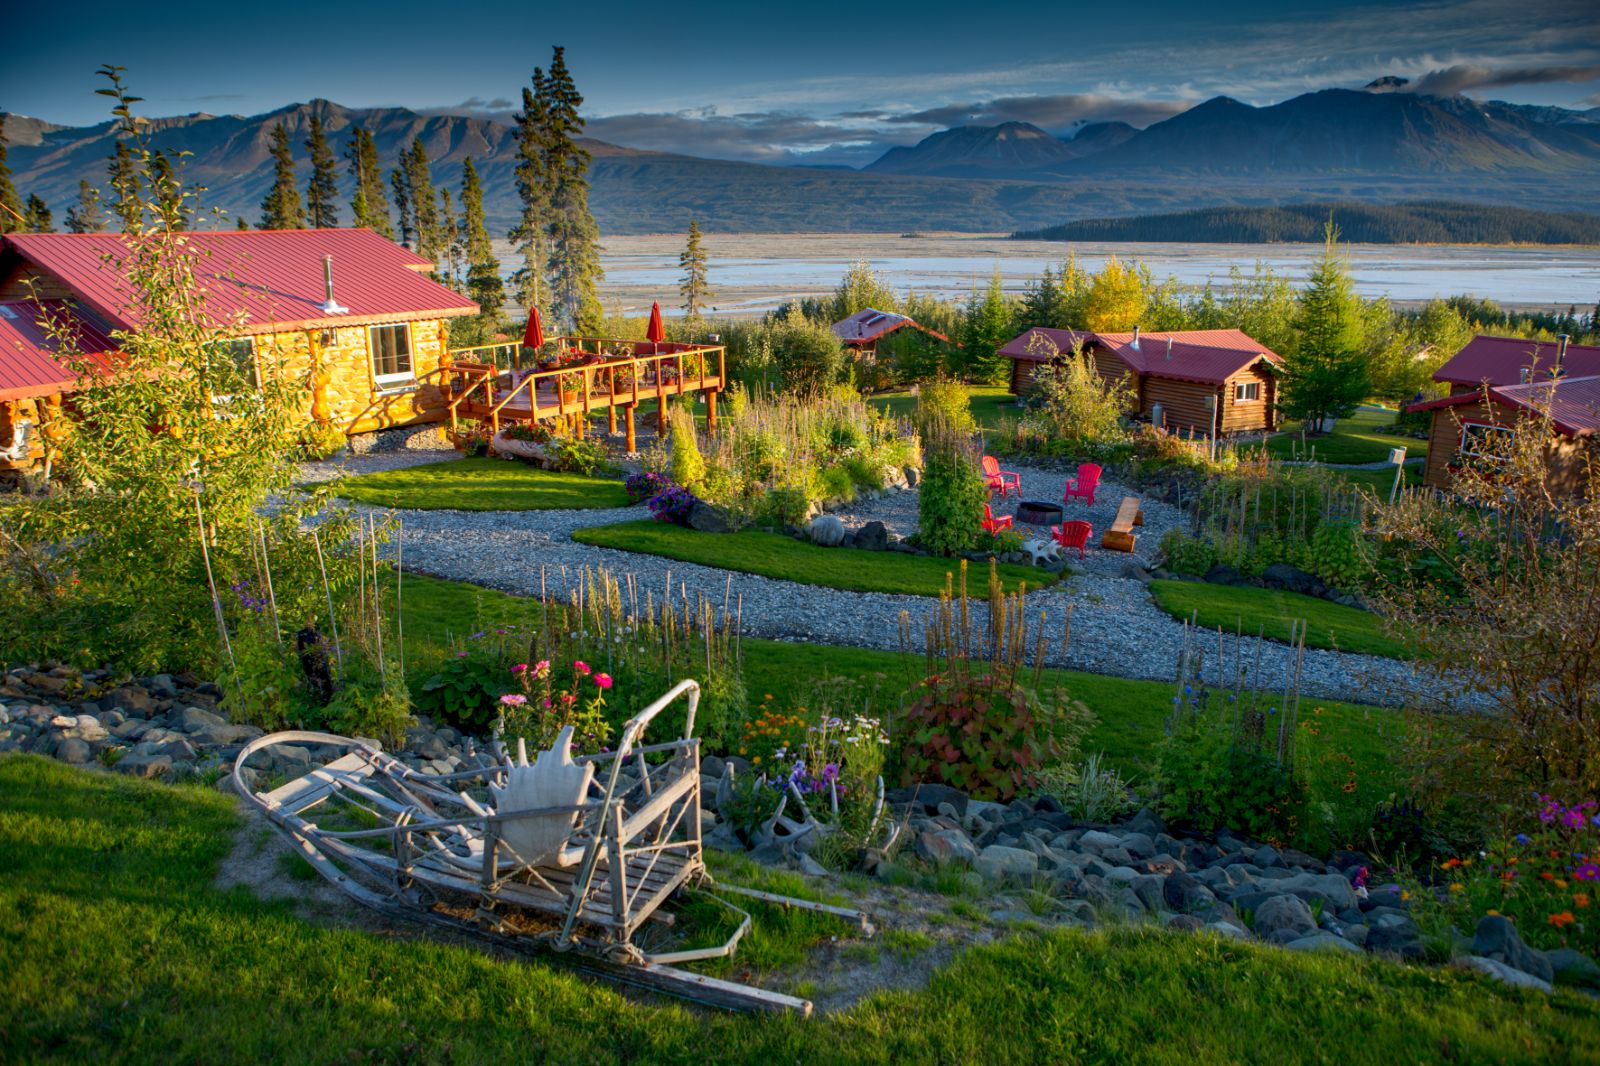 The grounds of Ulitma Thule Lodge in Alaska's Wrangell-St Elias. National Park